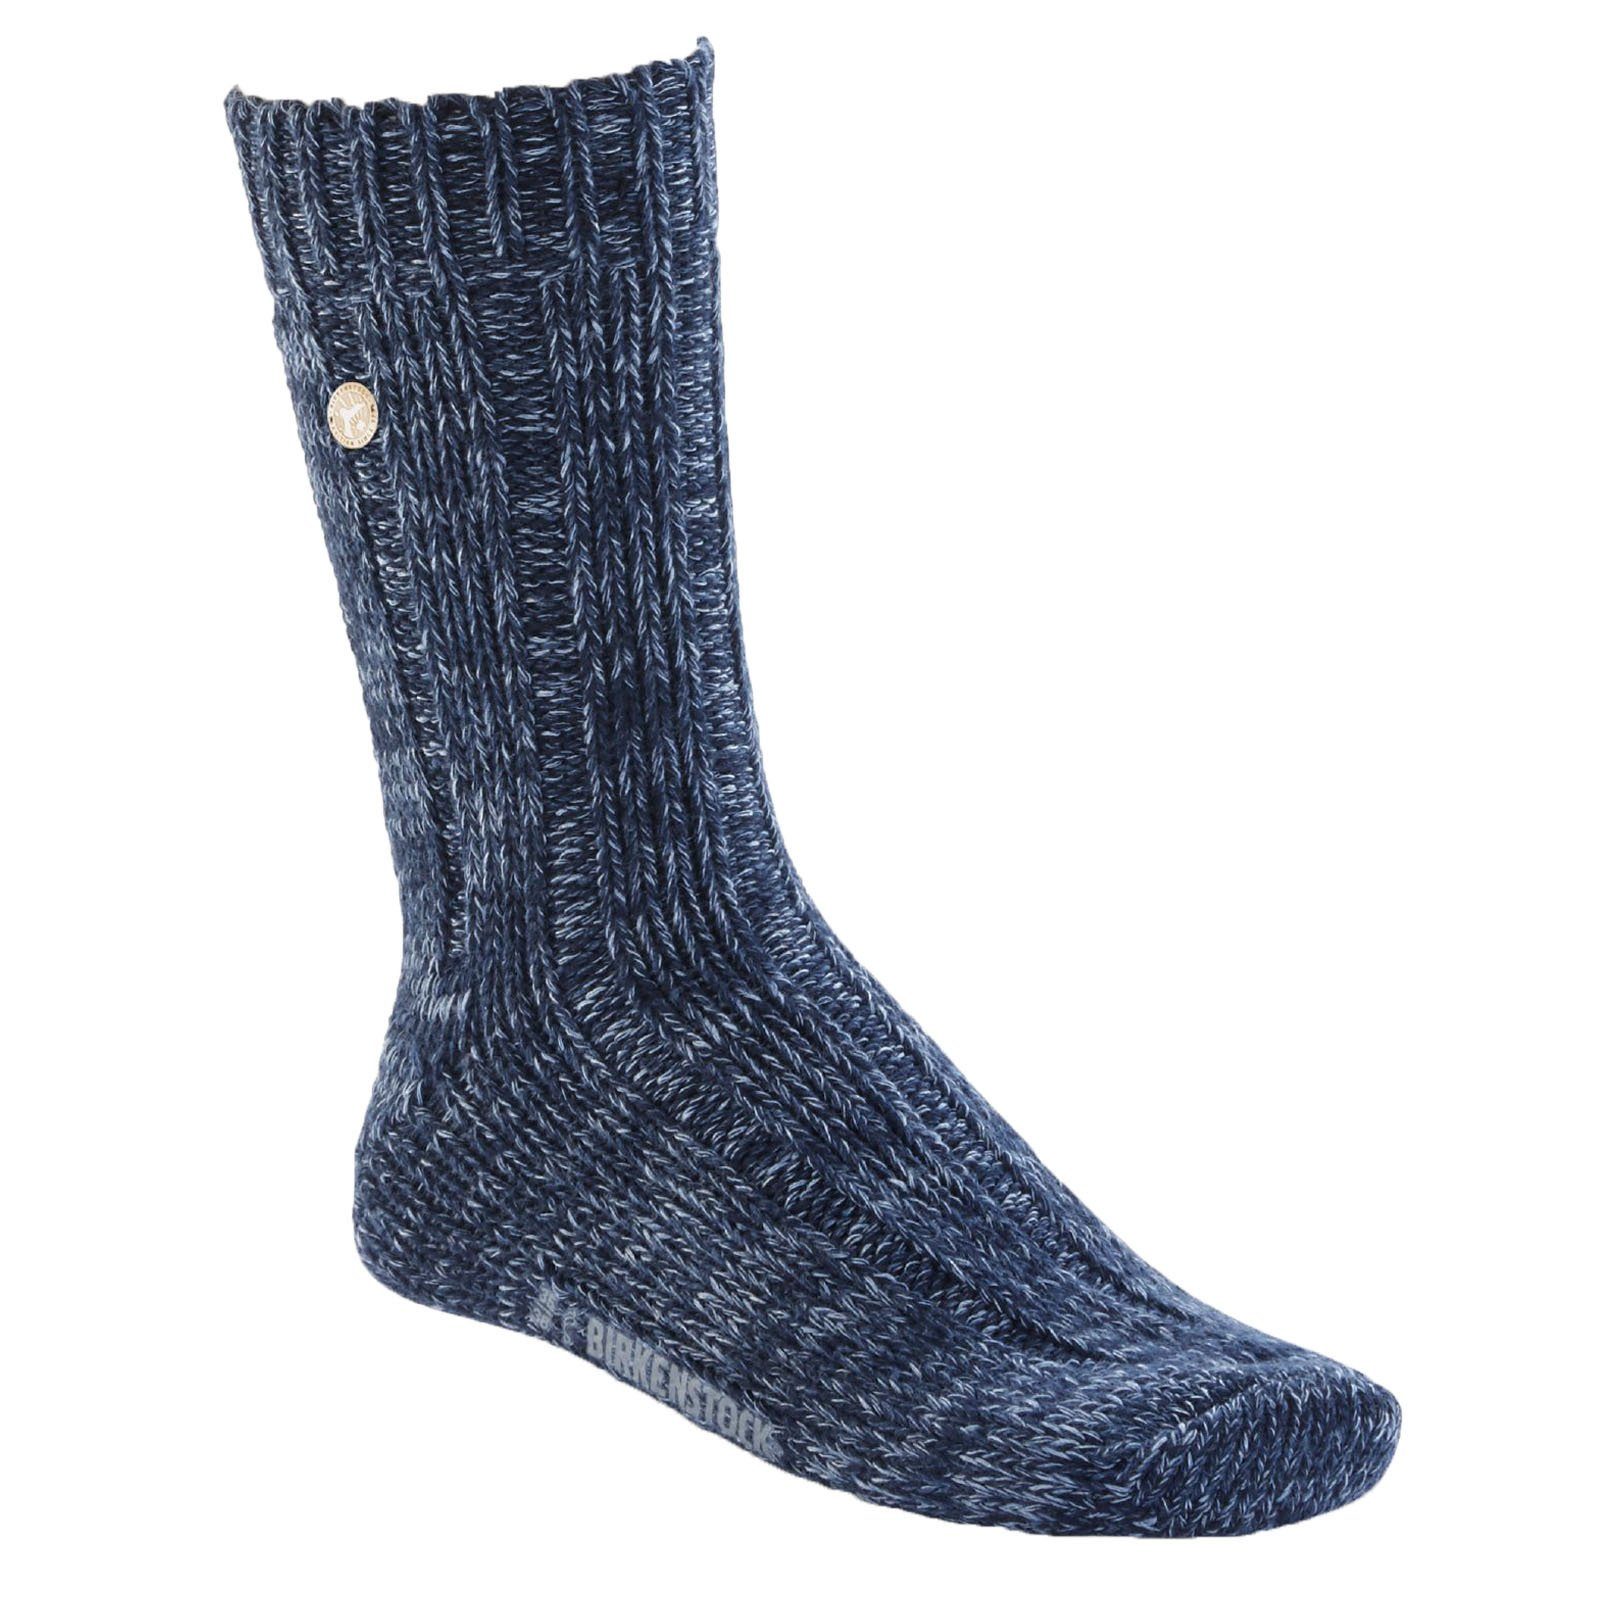 Birkenstock Kurzsocken Damen Socken - Strumpf, Cotton Twist Blau